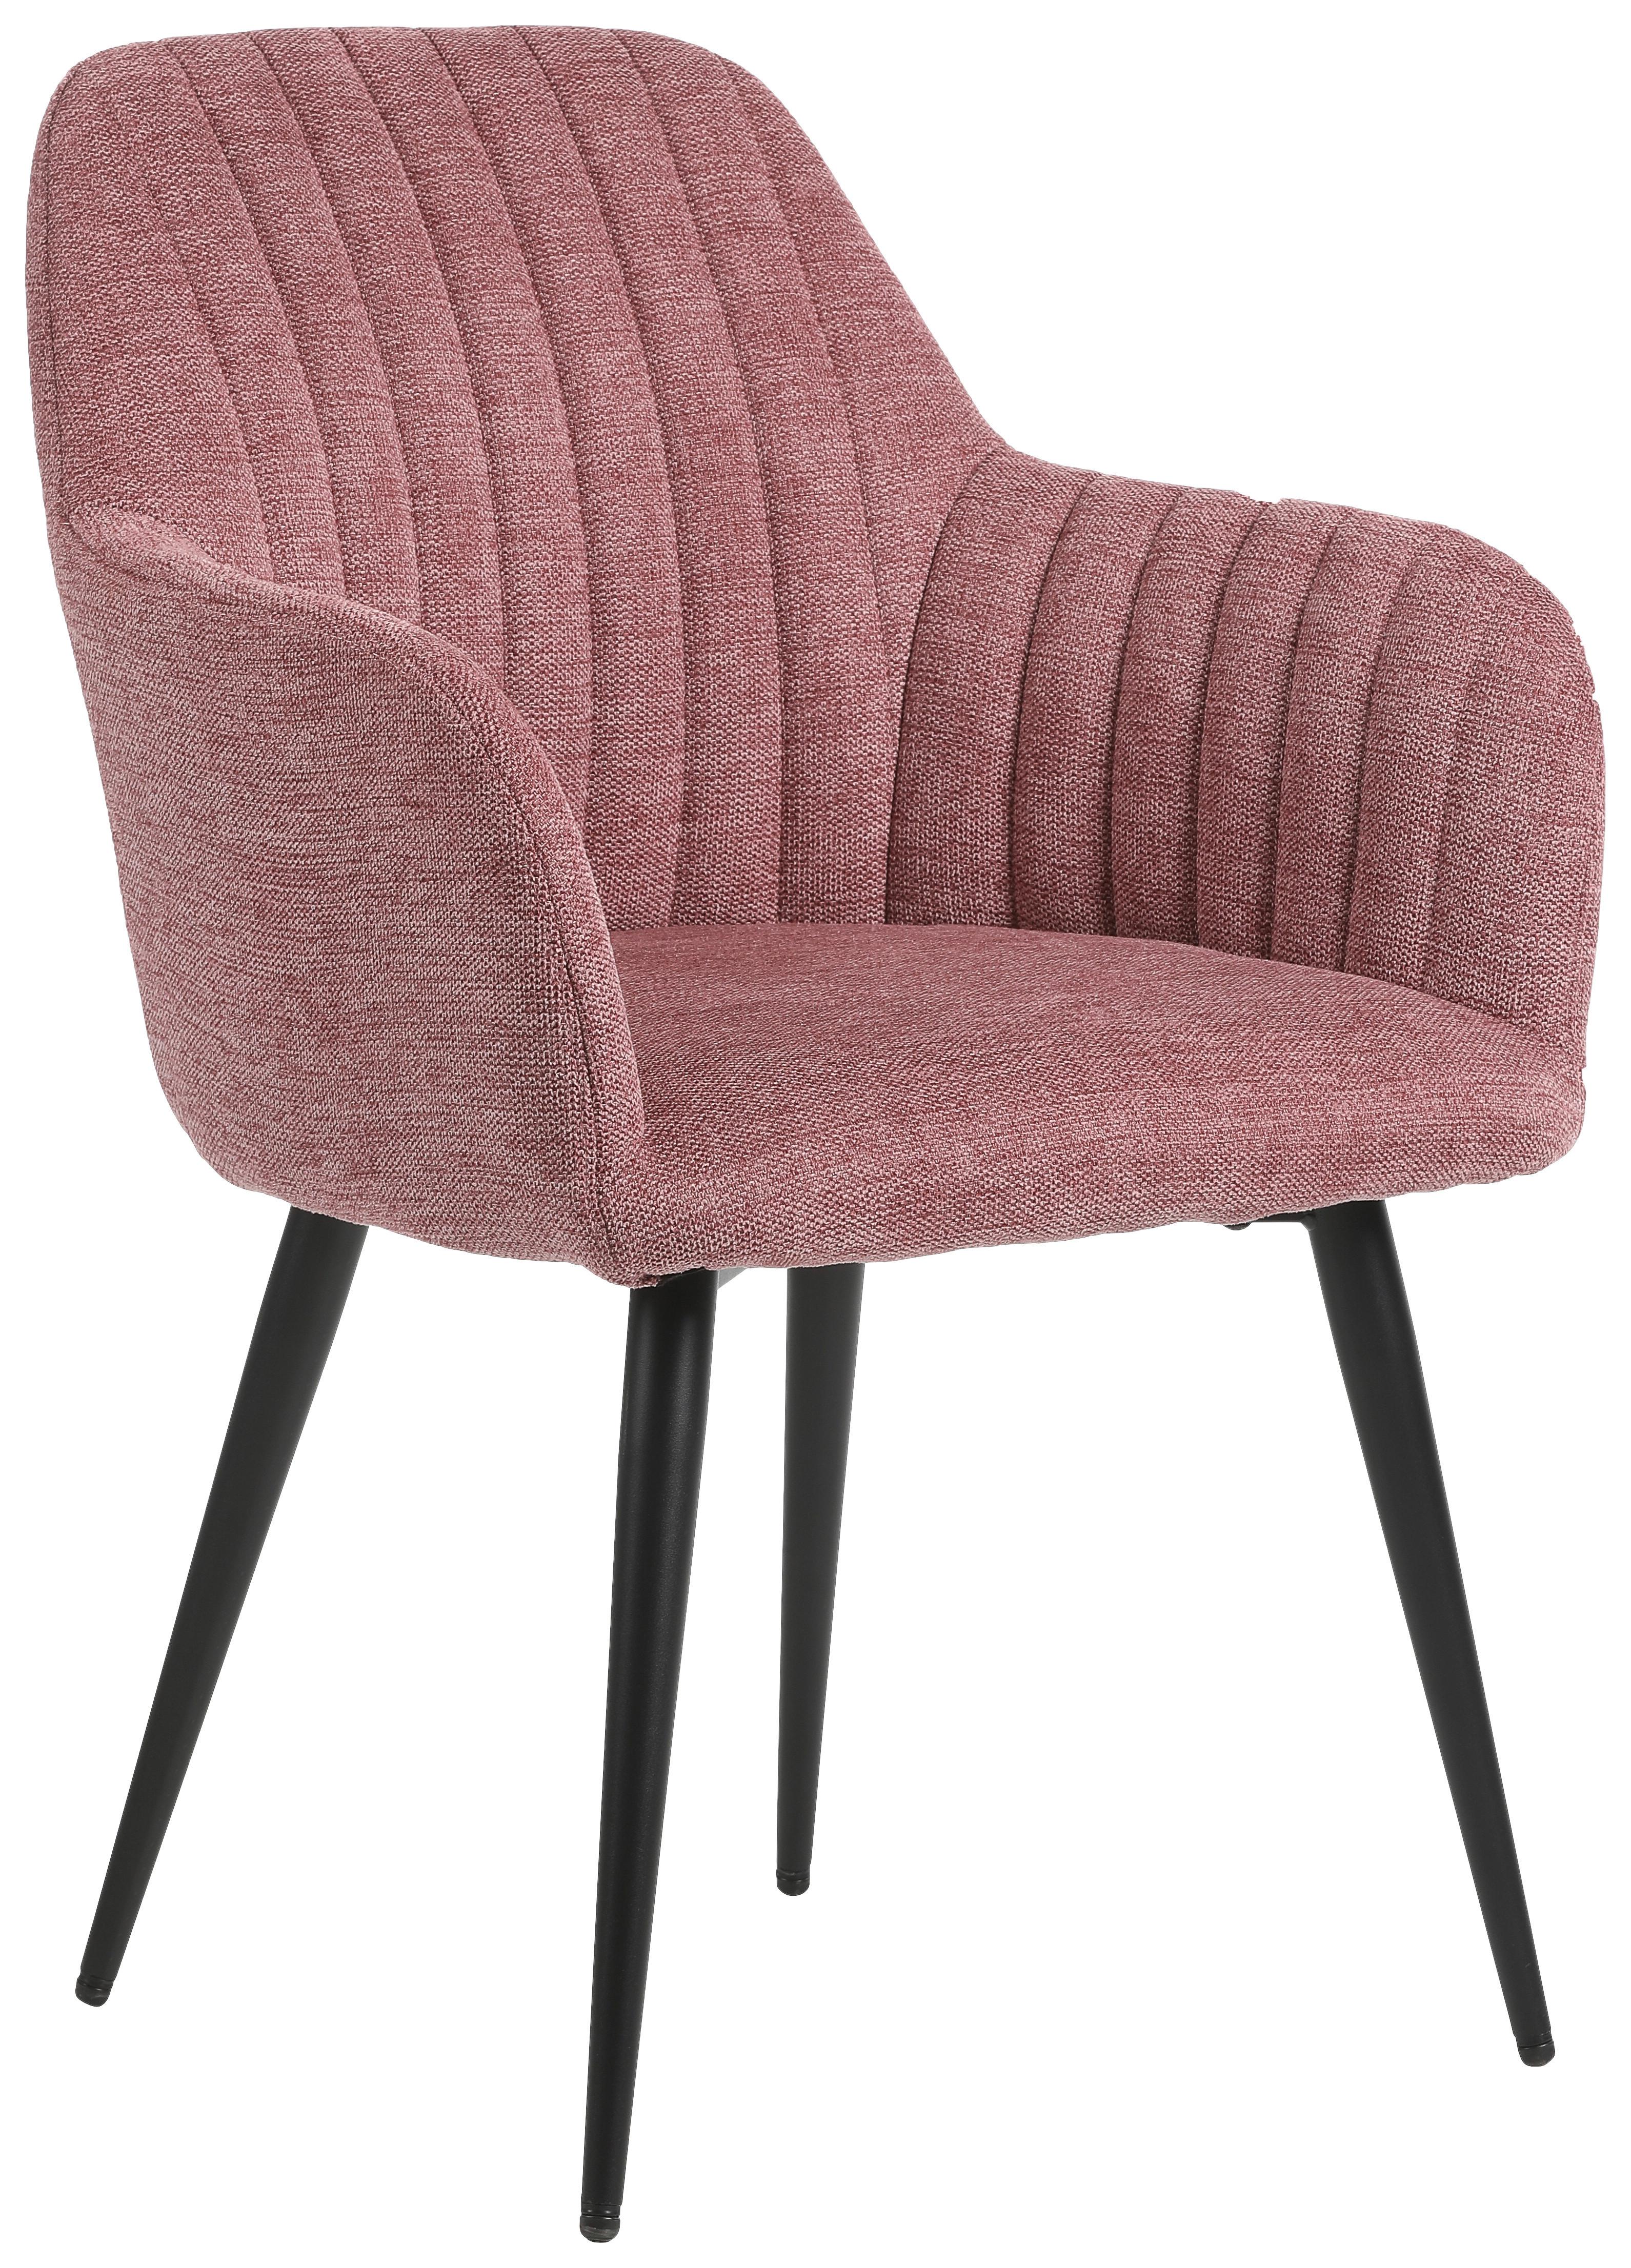 Naslanjač Martha -Based- - roza/črna, Moderno, kovina/tekstil (57/83,5/58cm) - Based